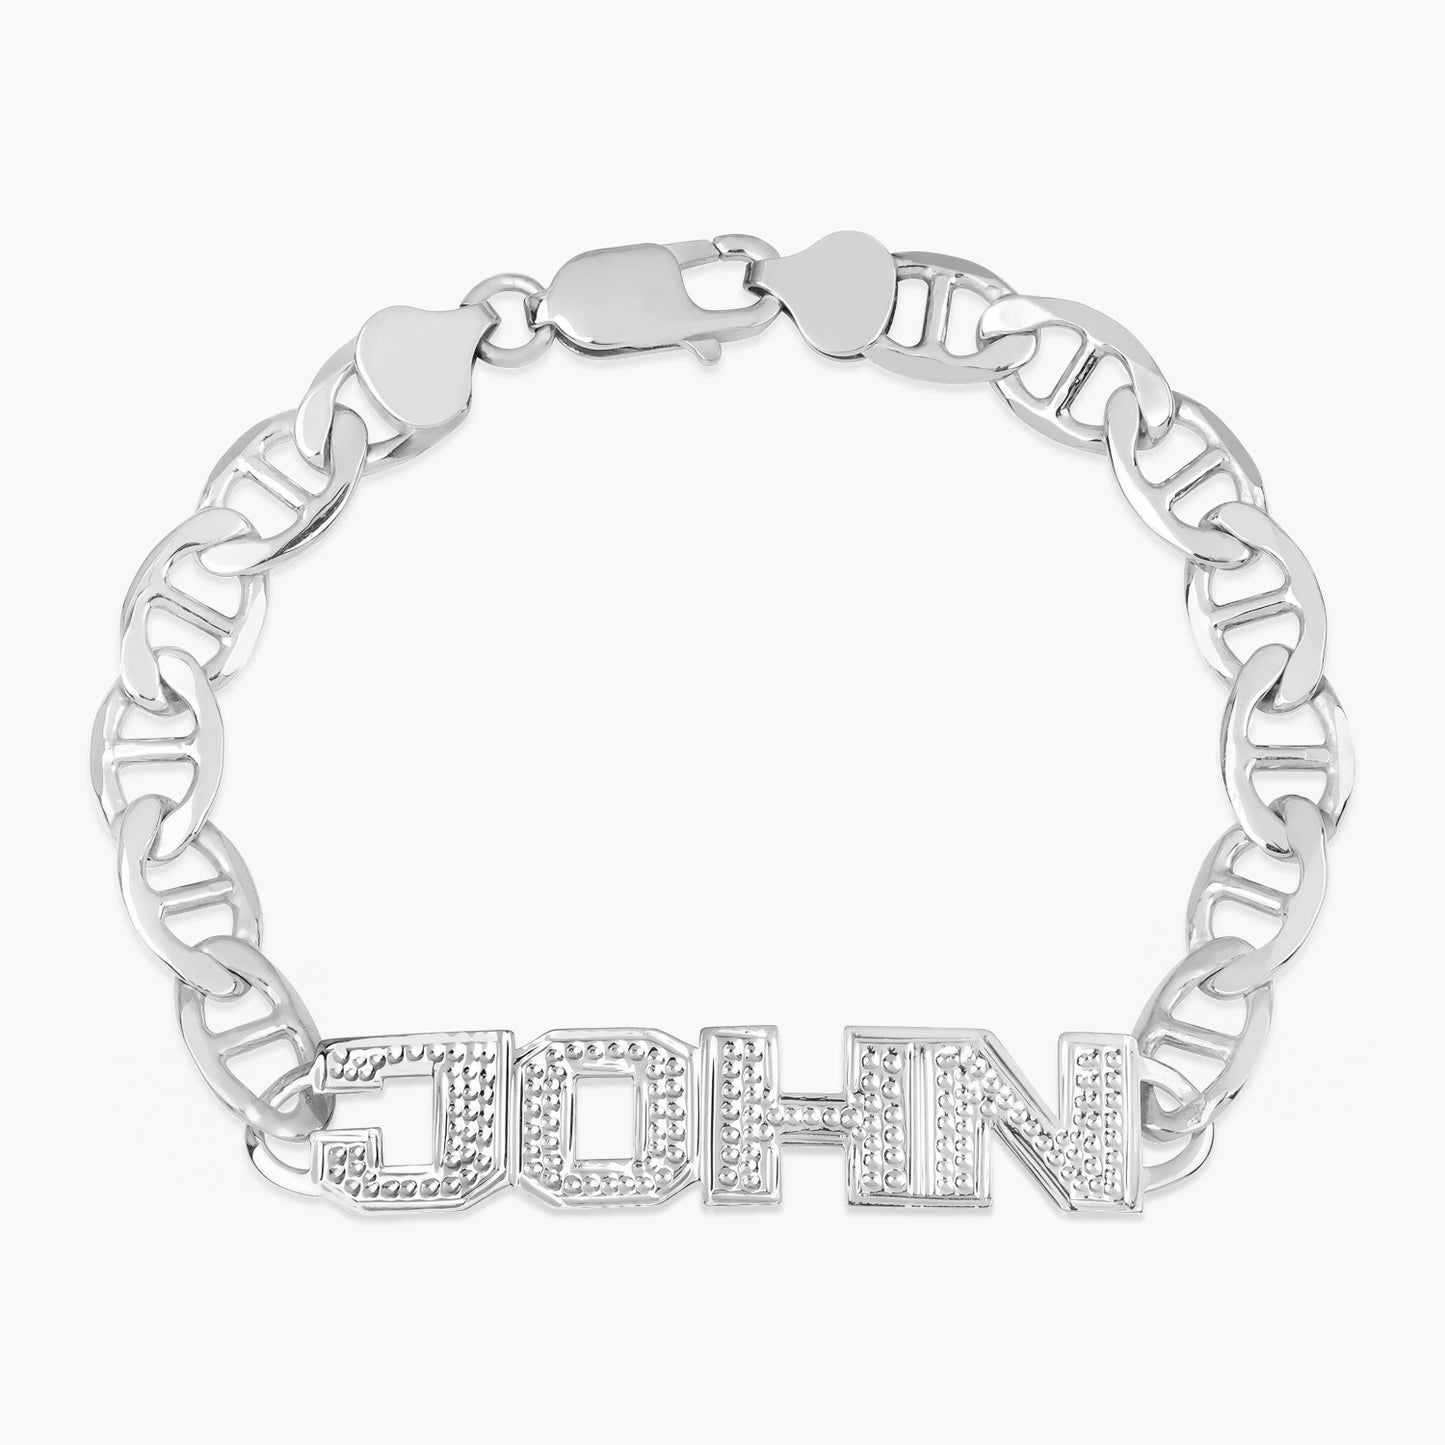 Name Bracelet w/ Mariner Chain